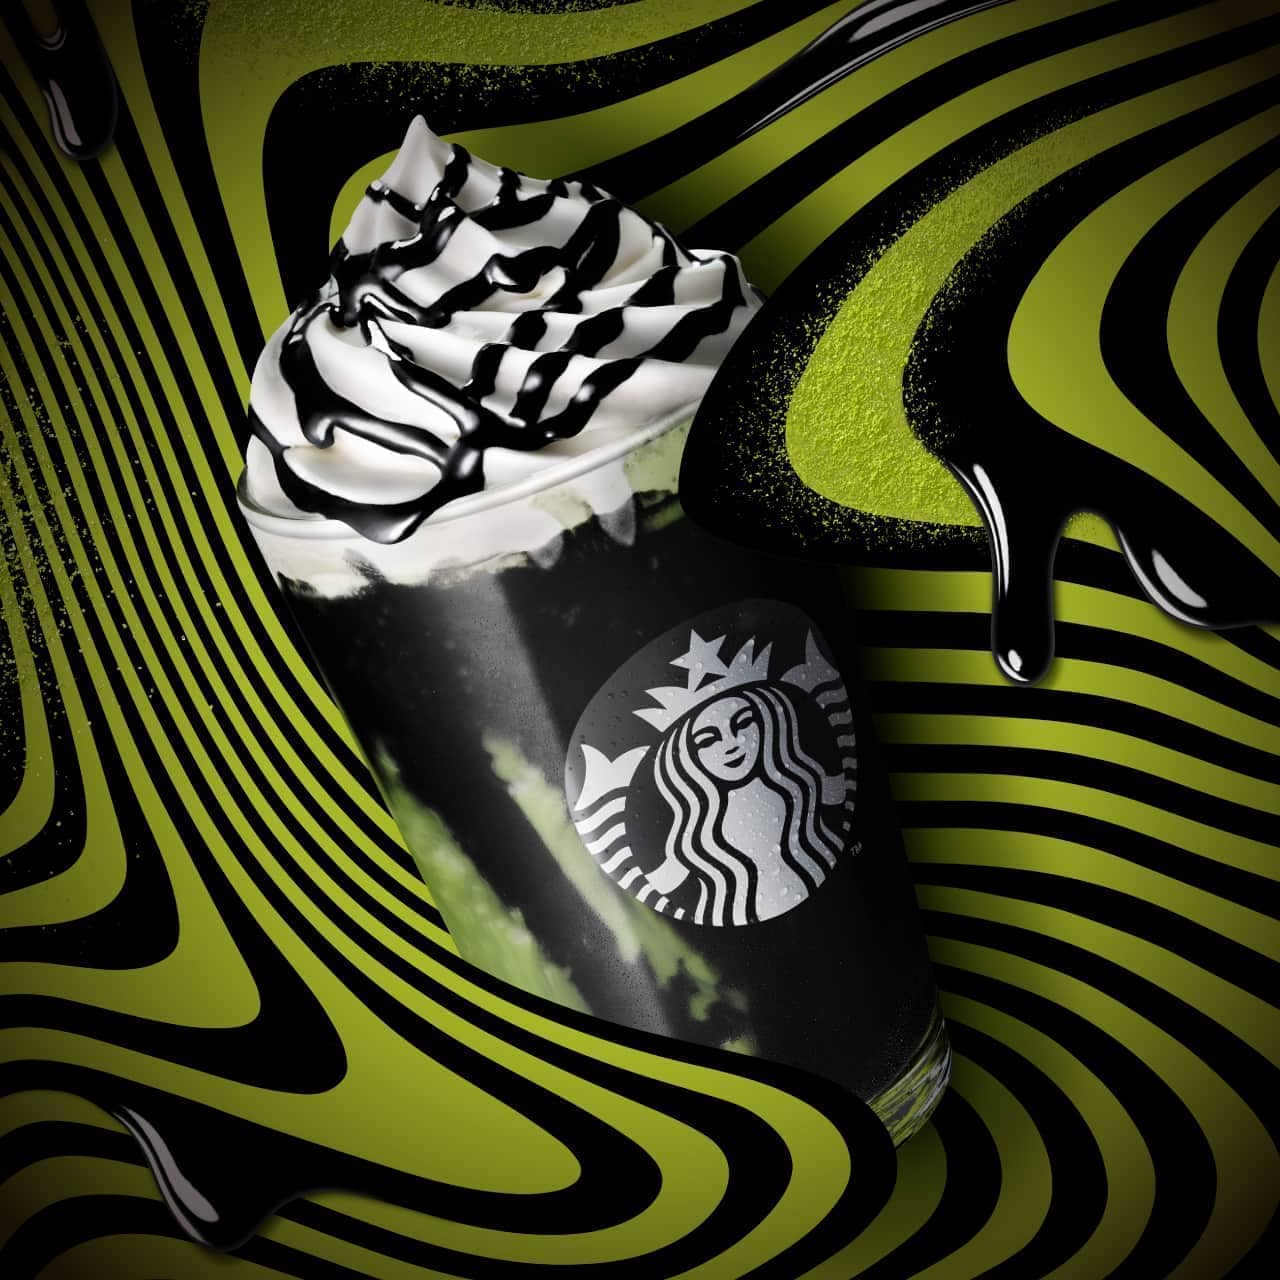 Exclusive "Booooo Customization" to Starbucks Frappuccinos